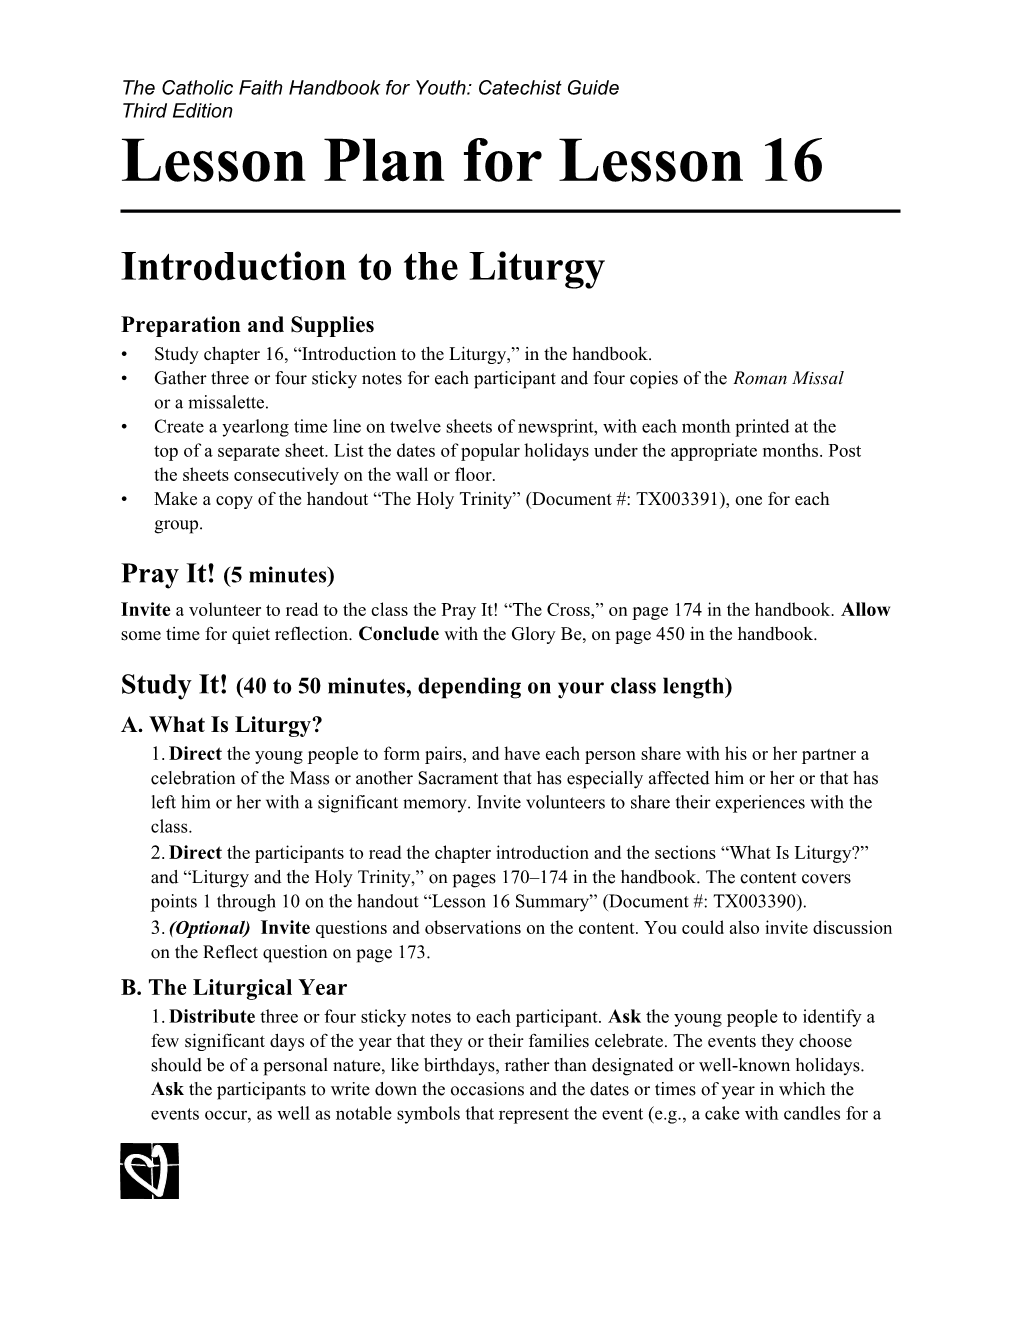 Lesson Plan for Lesson 16